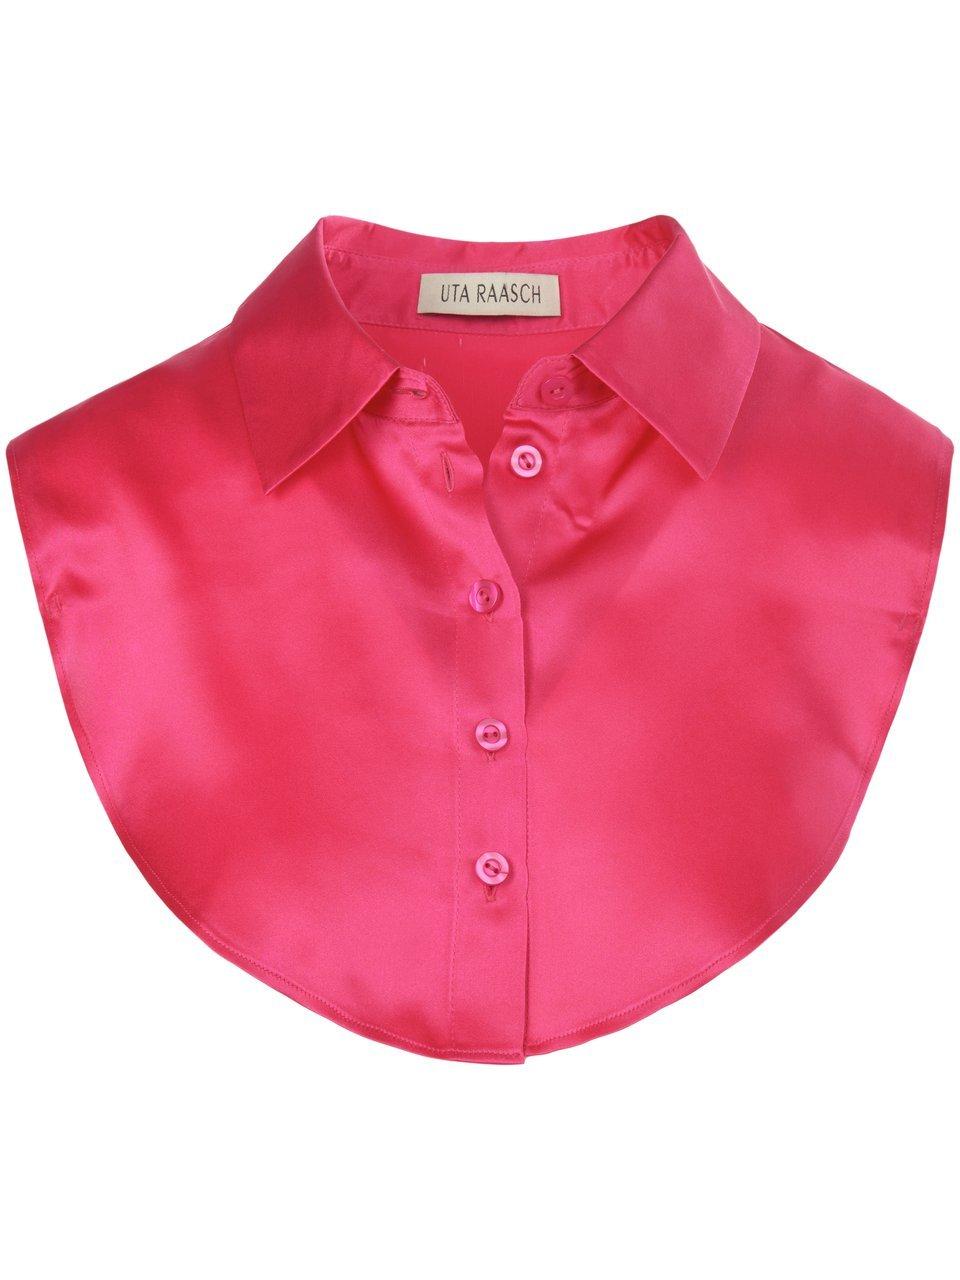 Image of Blouse collar in silk satin Uta Raasch pink